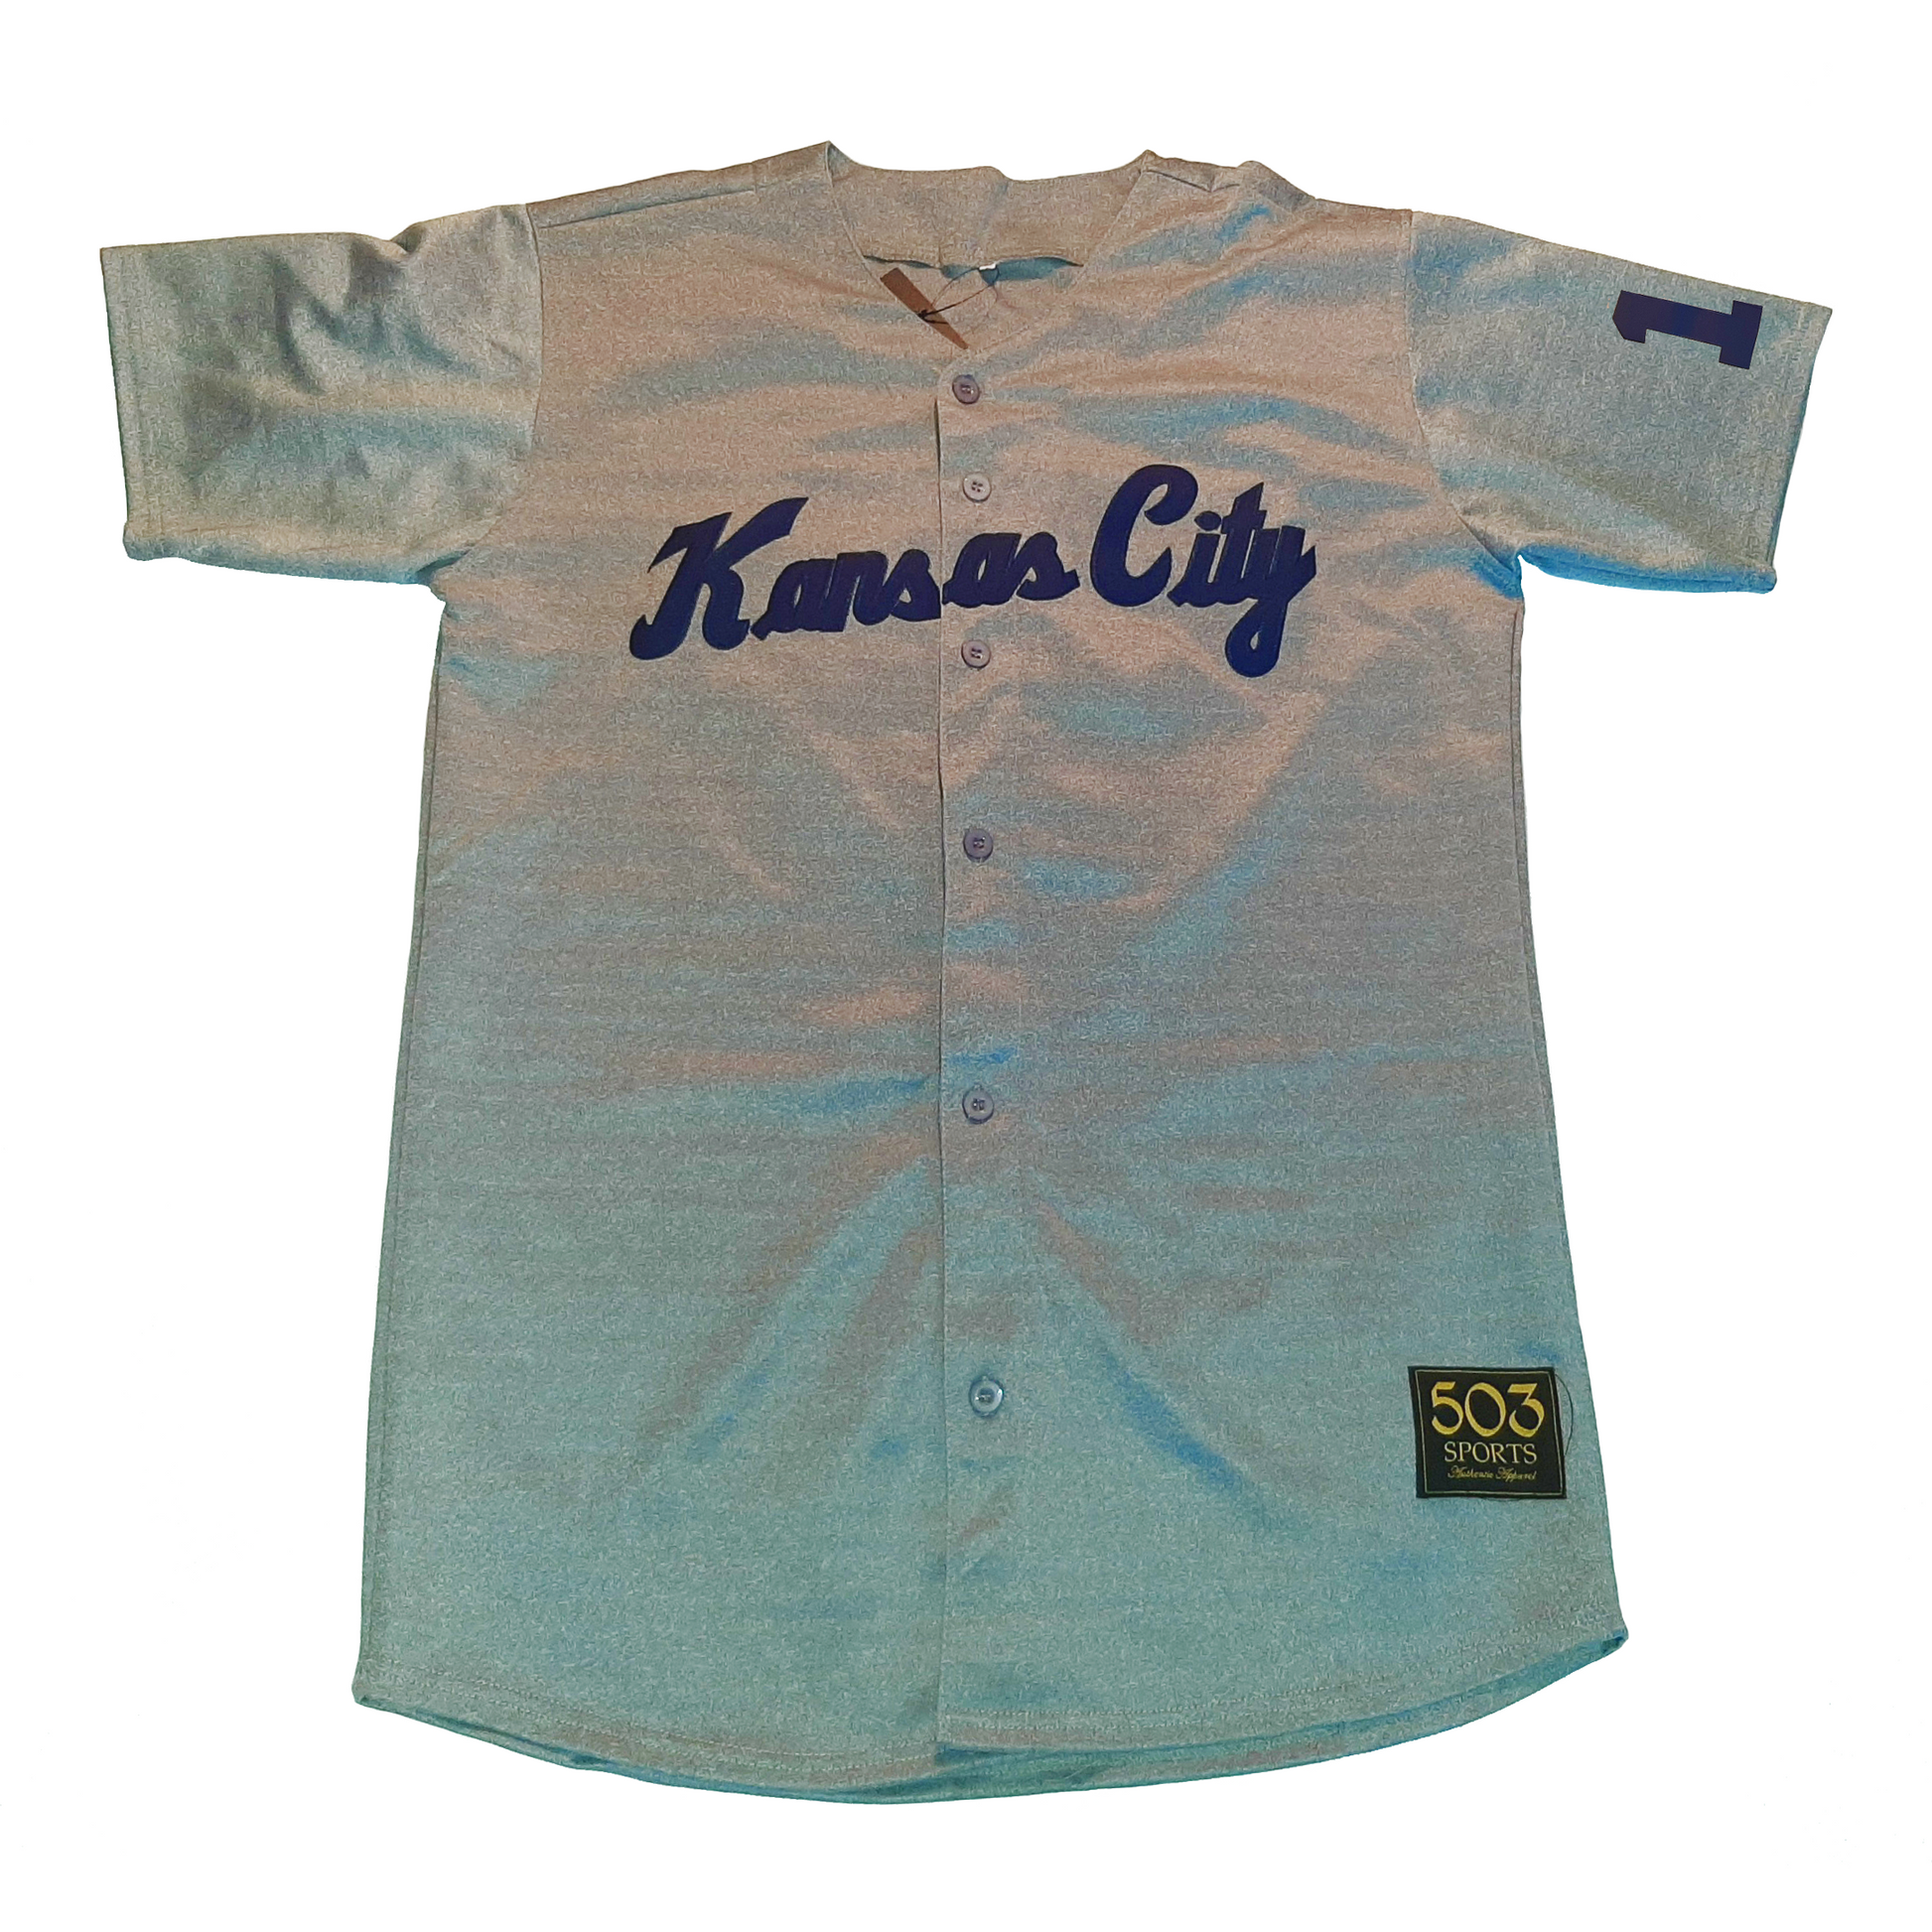 kansas city baseball shirt